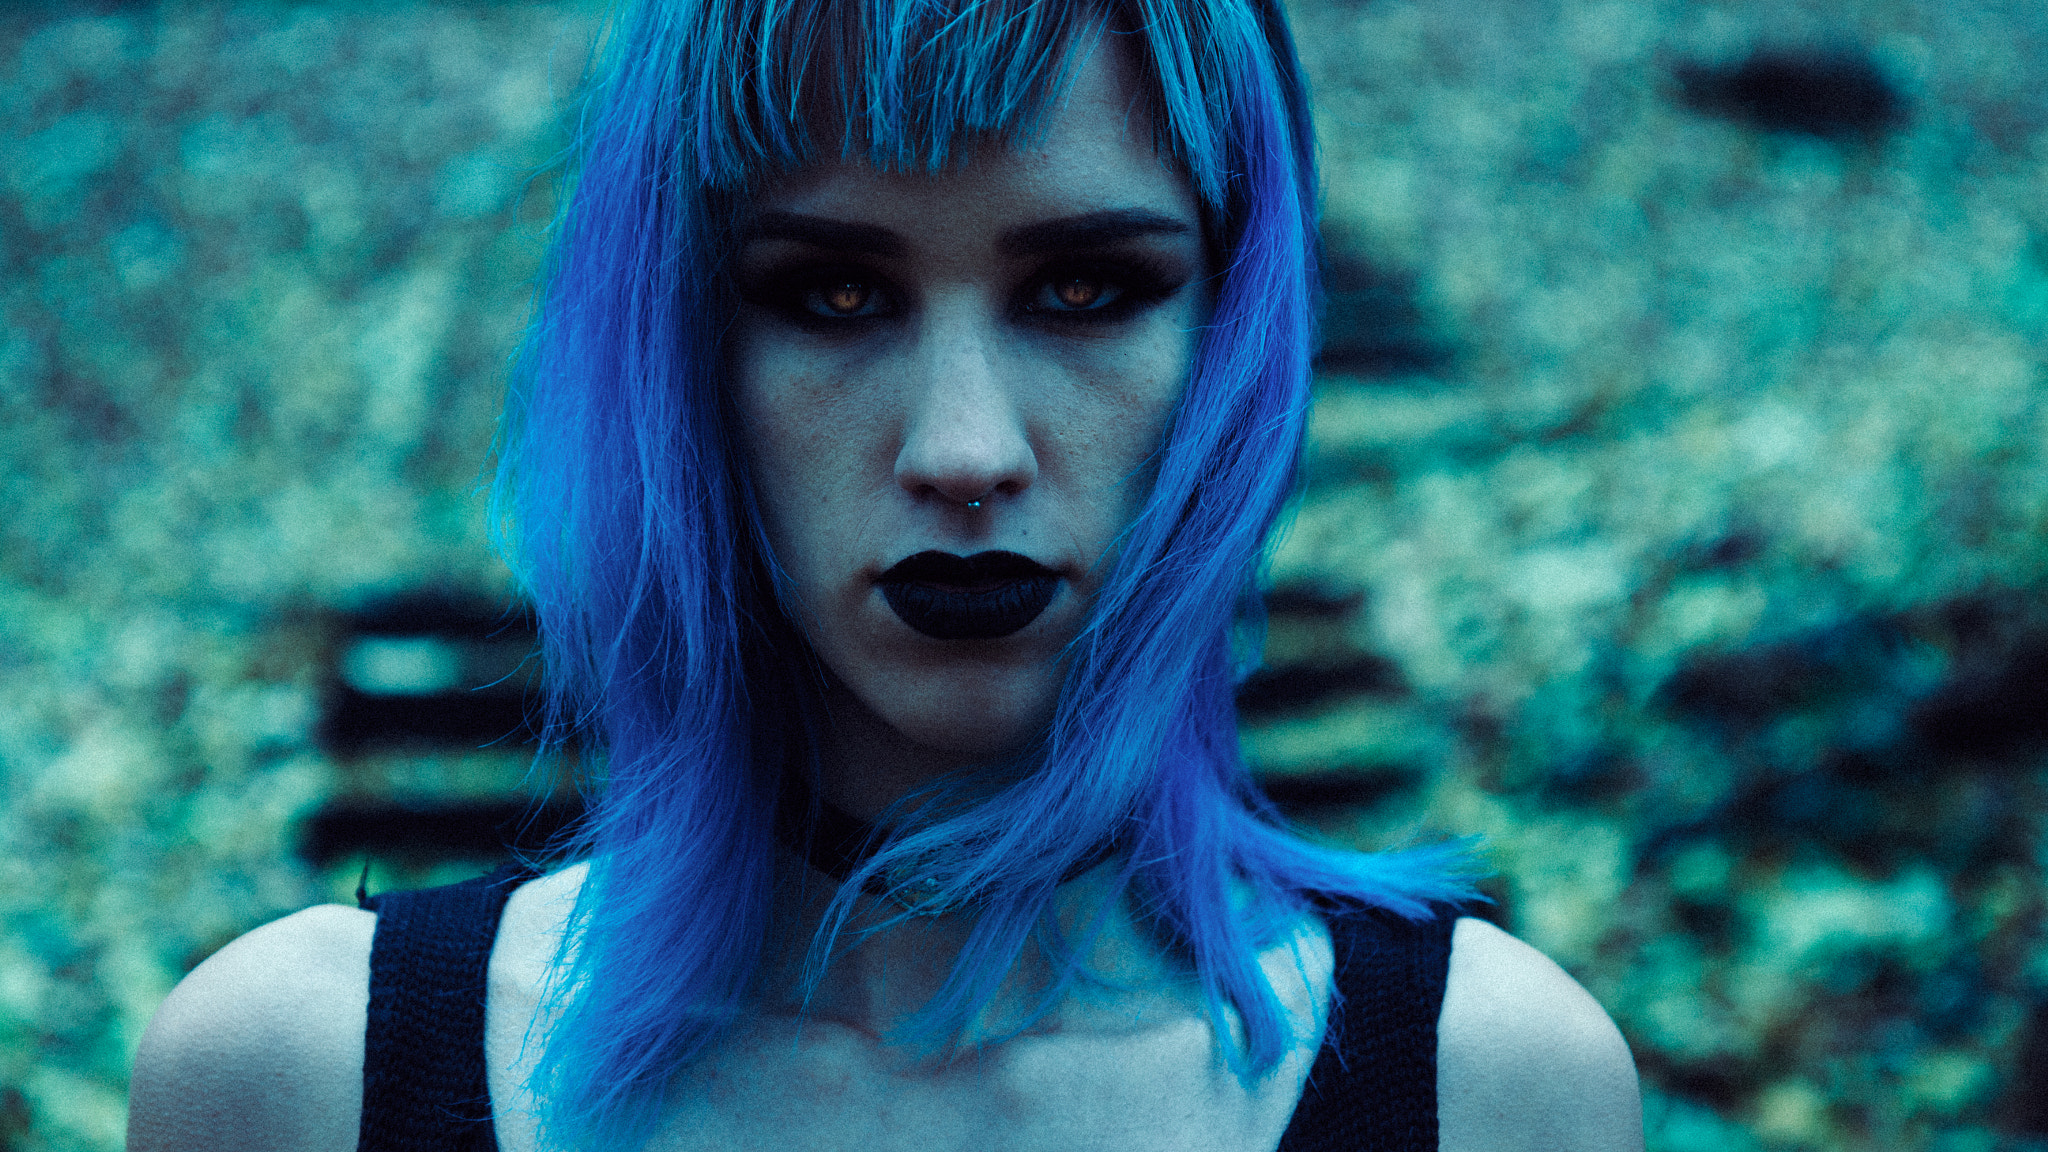 People 2048x1152 dark blue hair glowing eyes fantasy girl women model 500px Dark Indigo